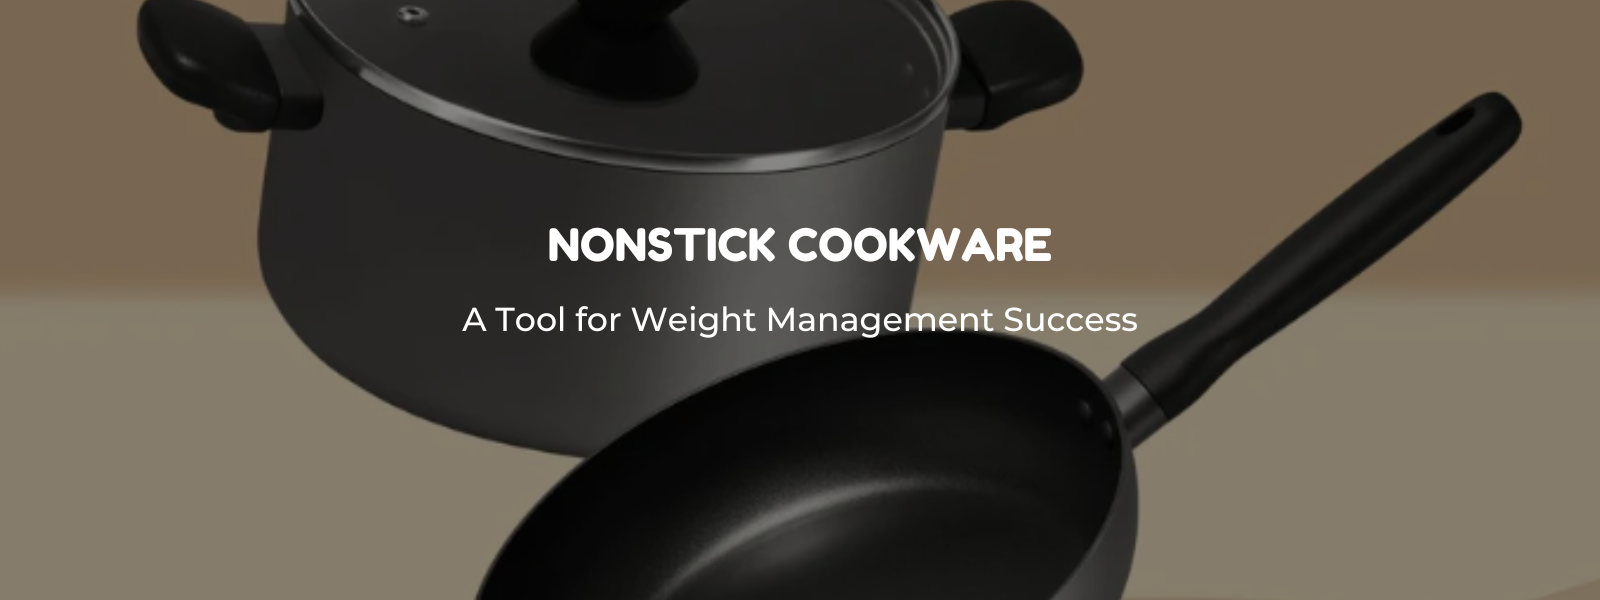 Nonstick Cookware: A Tool for Weight Management Success